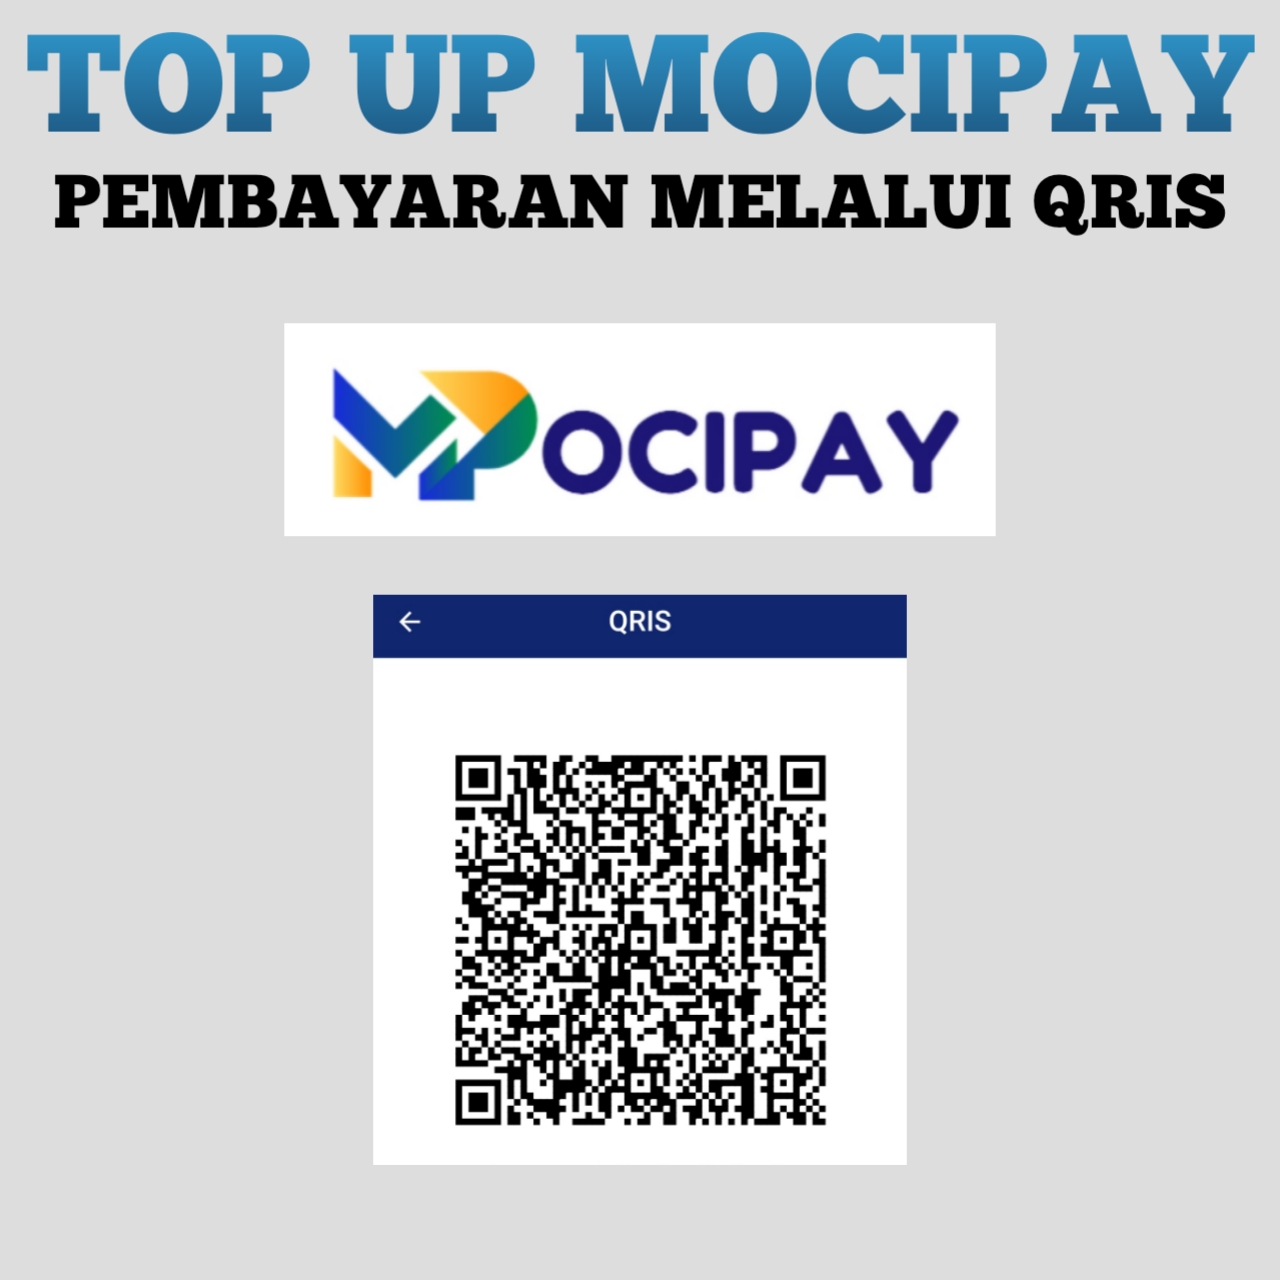 Top Up Mocipay menggunakan QRIS